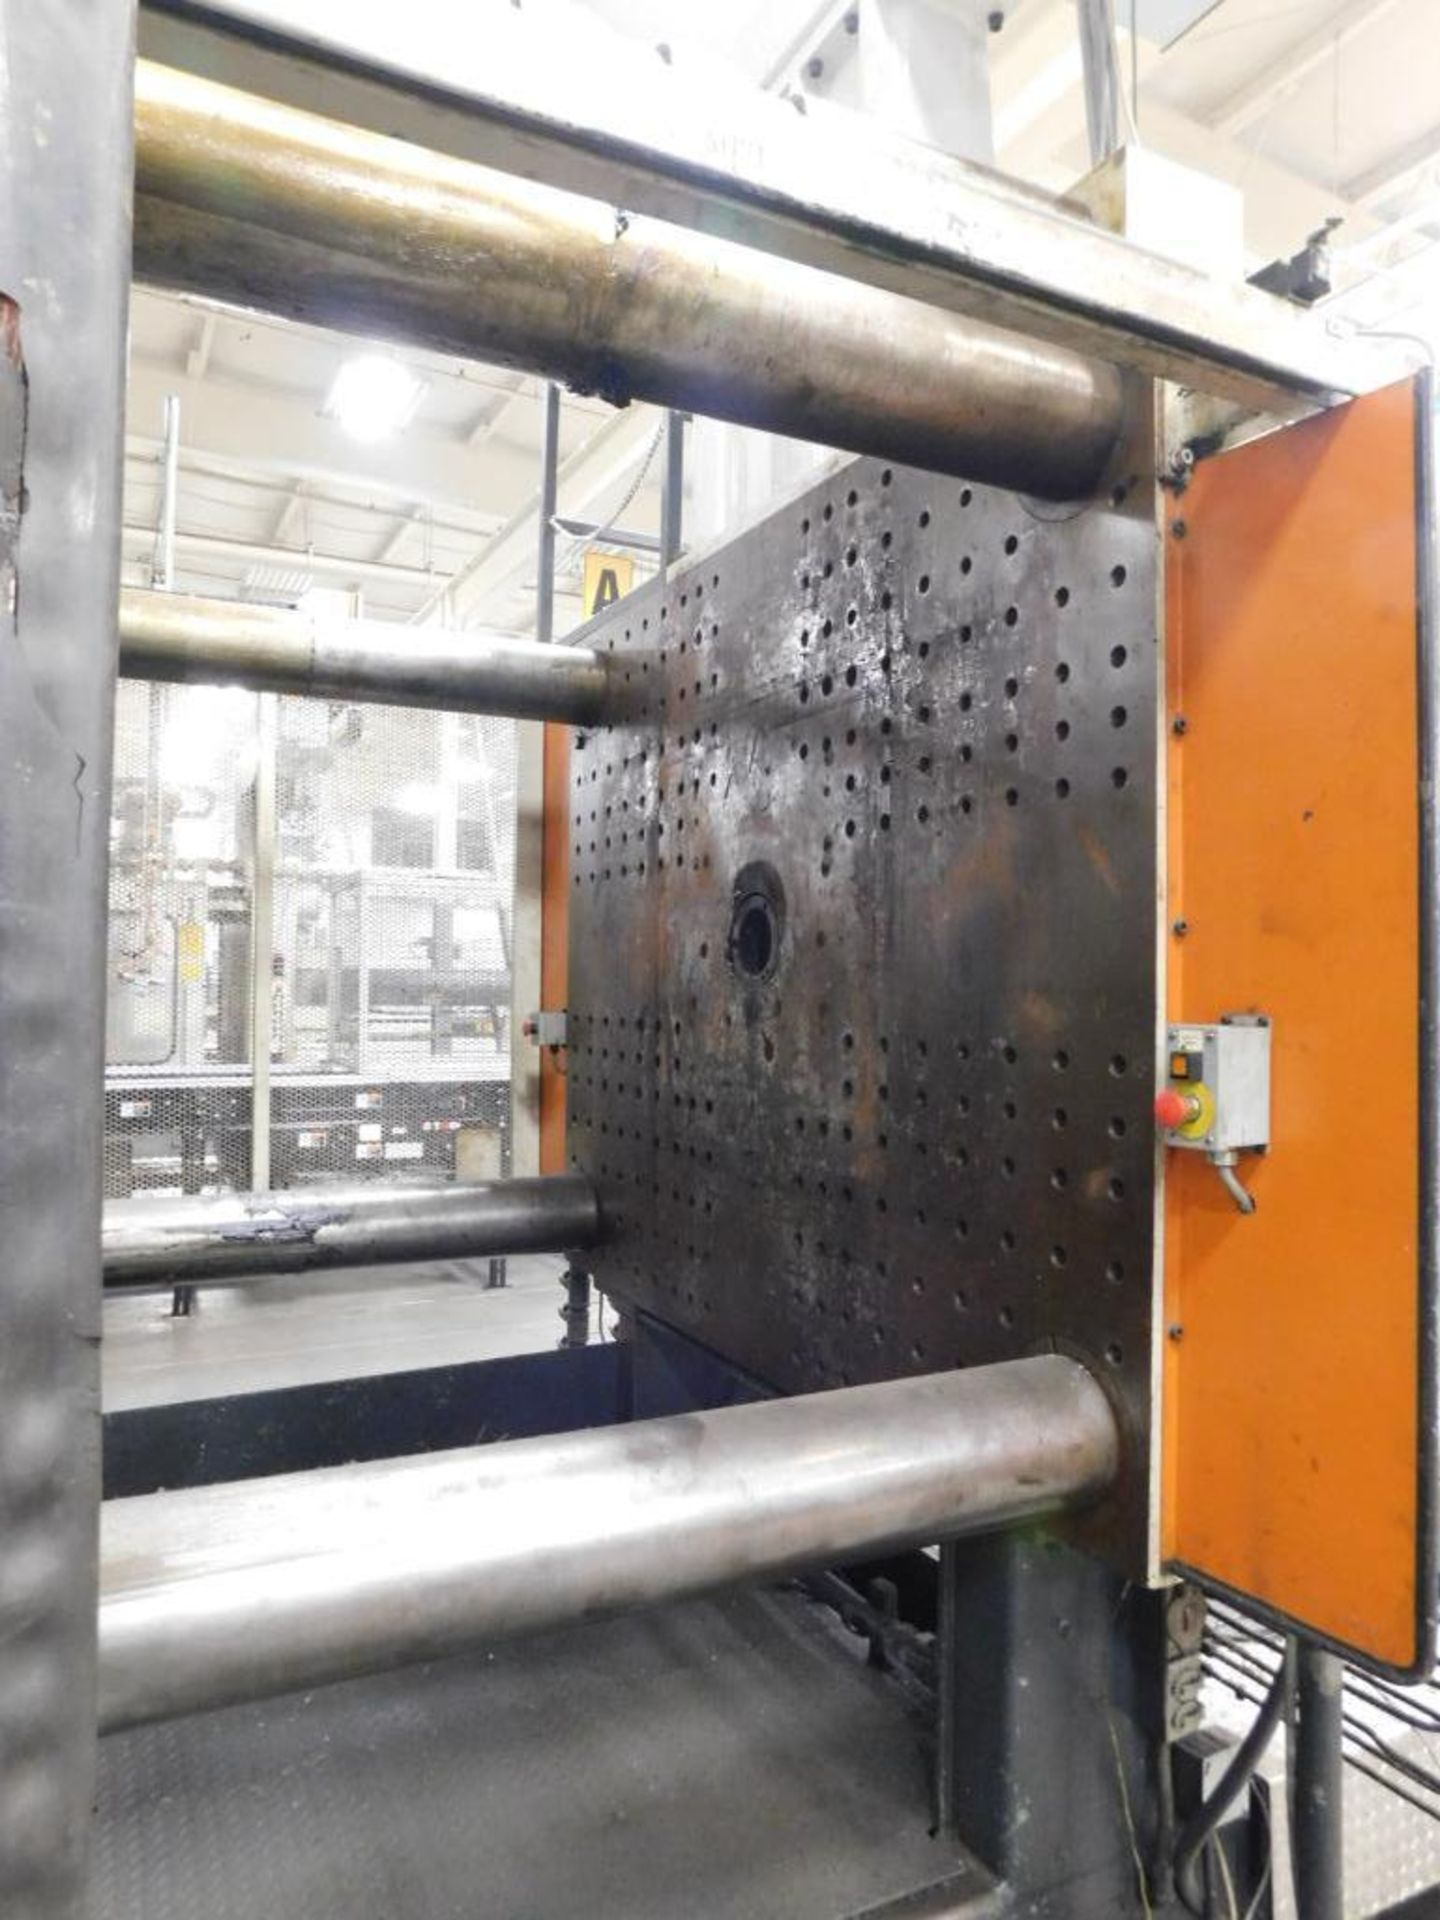 Cincinnati Milacron H1000-225 W/P 1000-Ton Horizontal Injection Molding Machine, S/N 3961A01/83-3 (A - Image 12 of 14